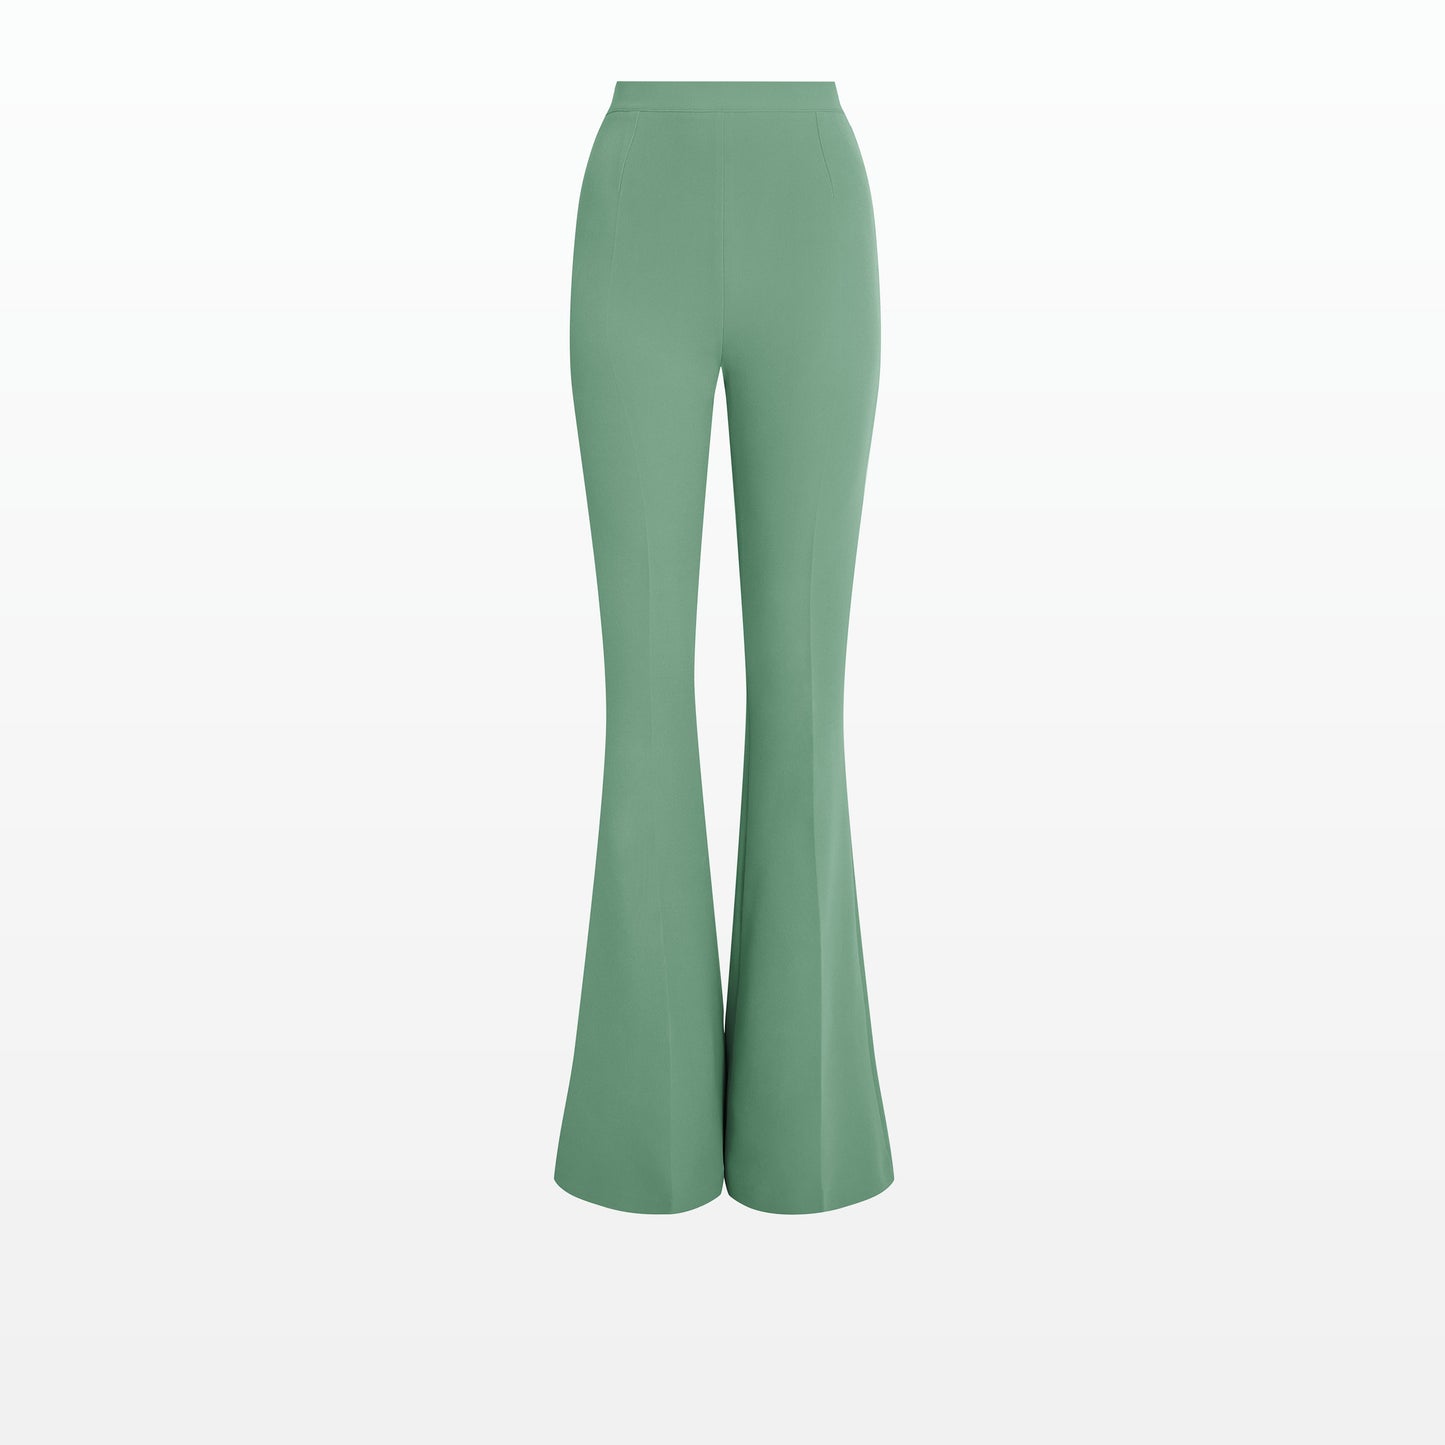 Halluana Fern Green Trousers